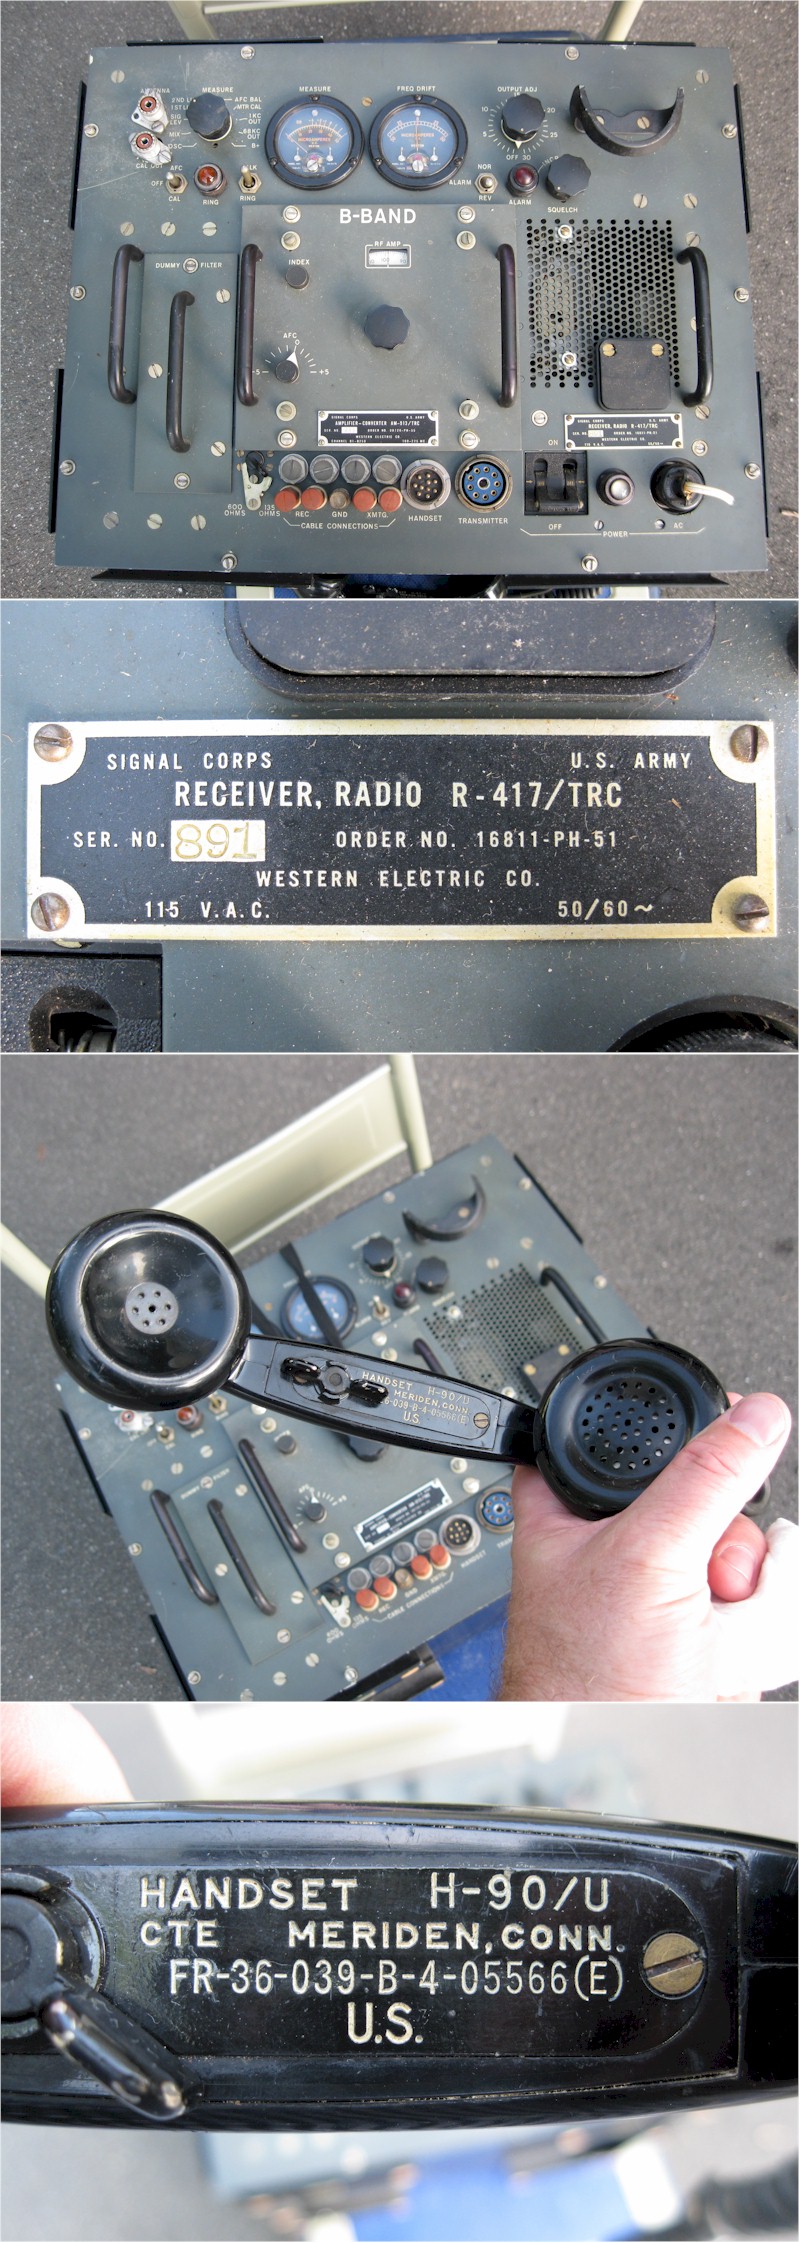 Zenith R-147/TRC Radio Receiver